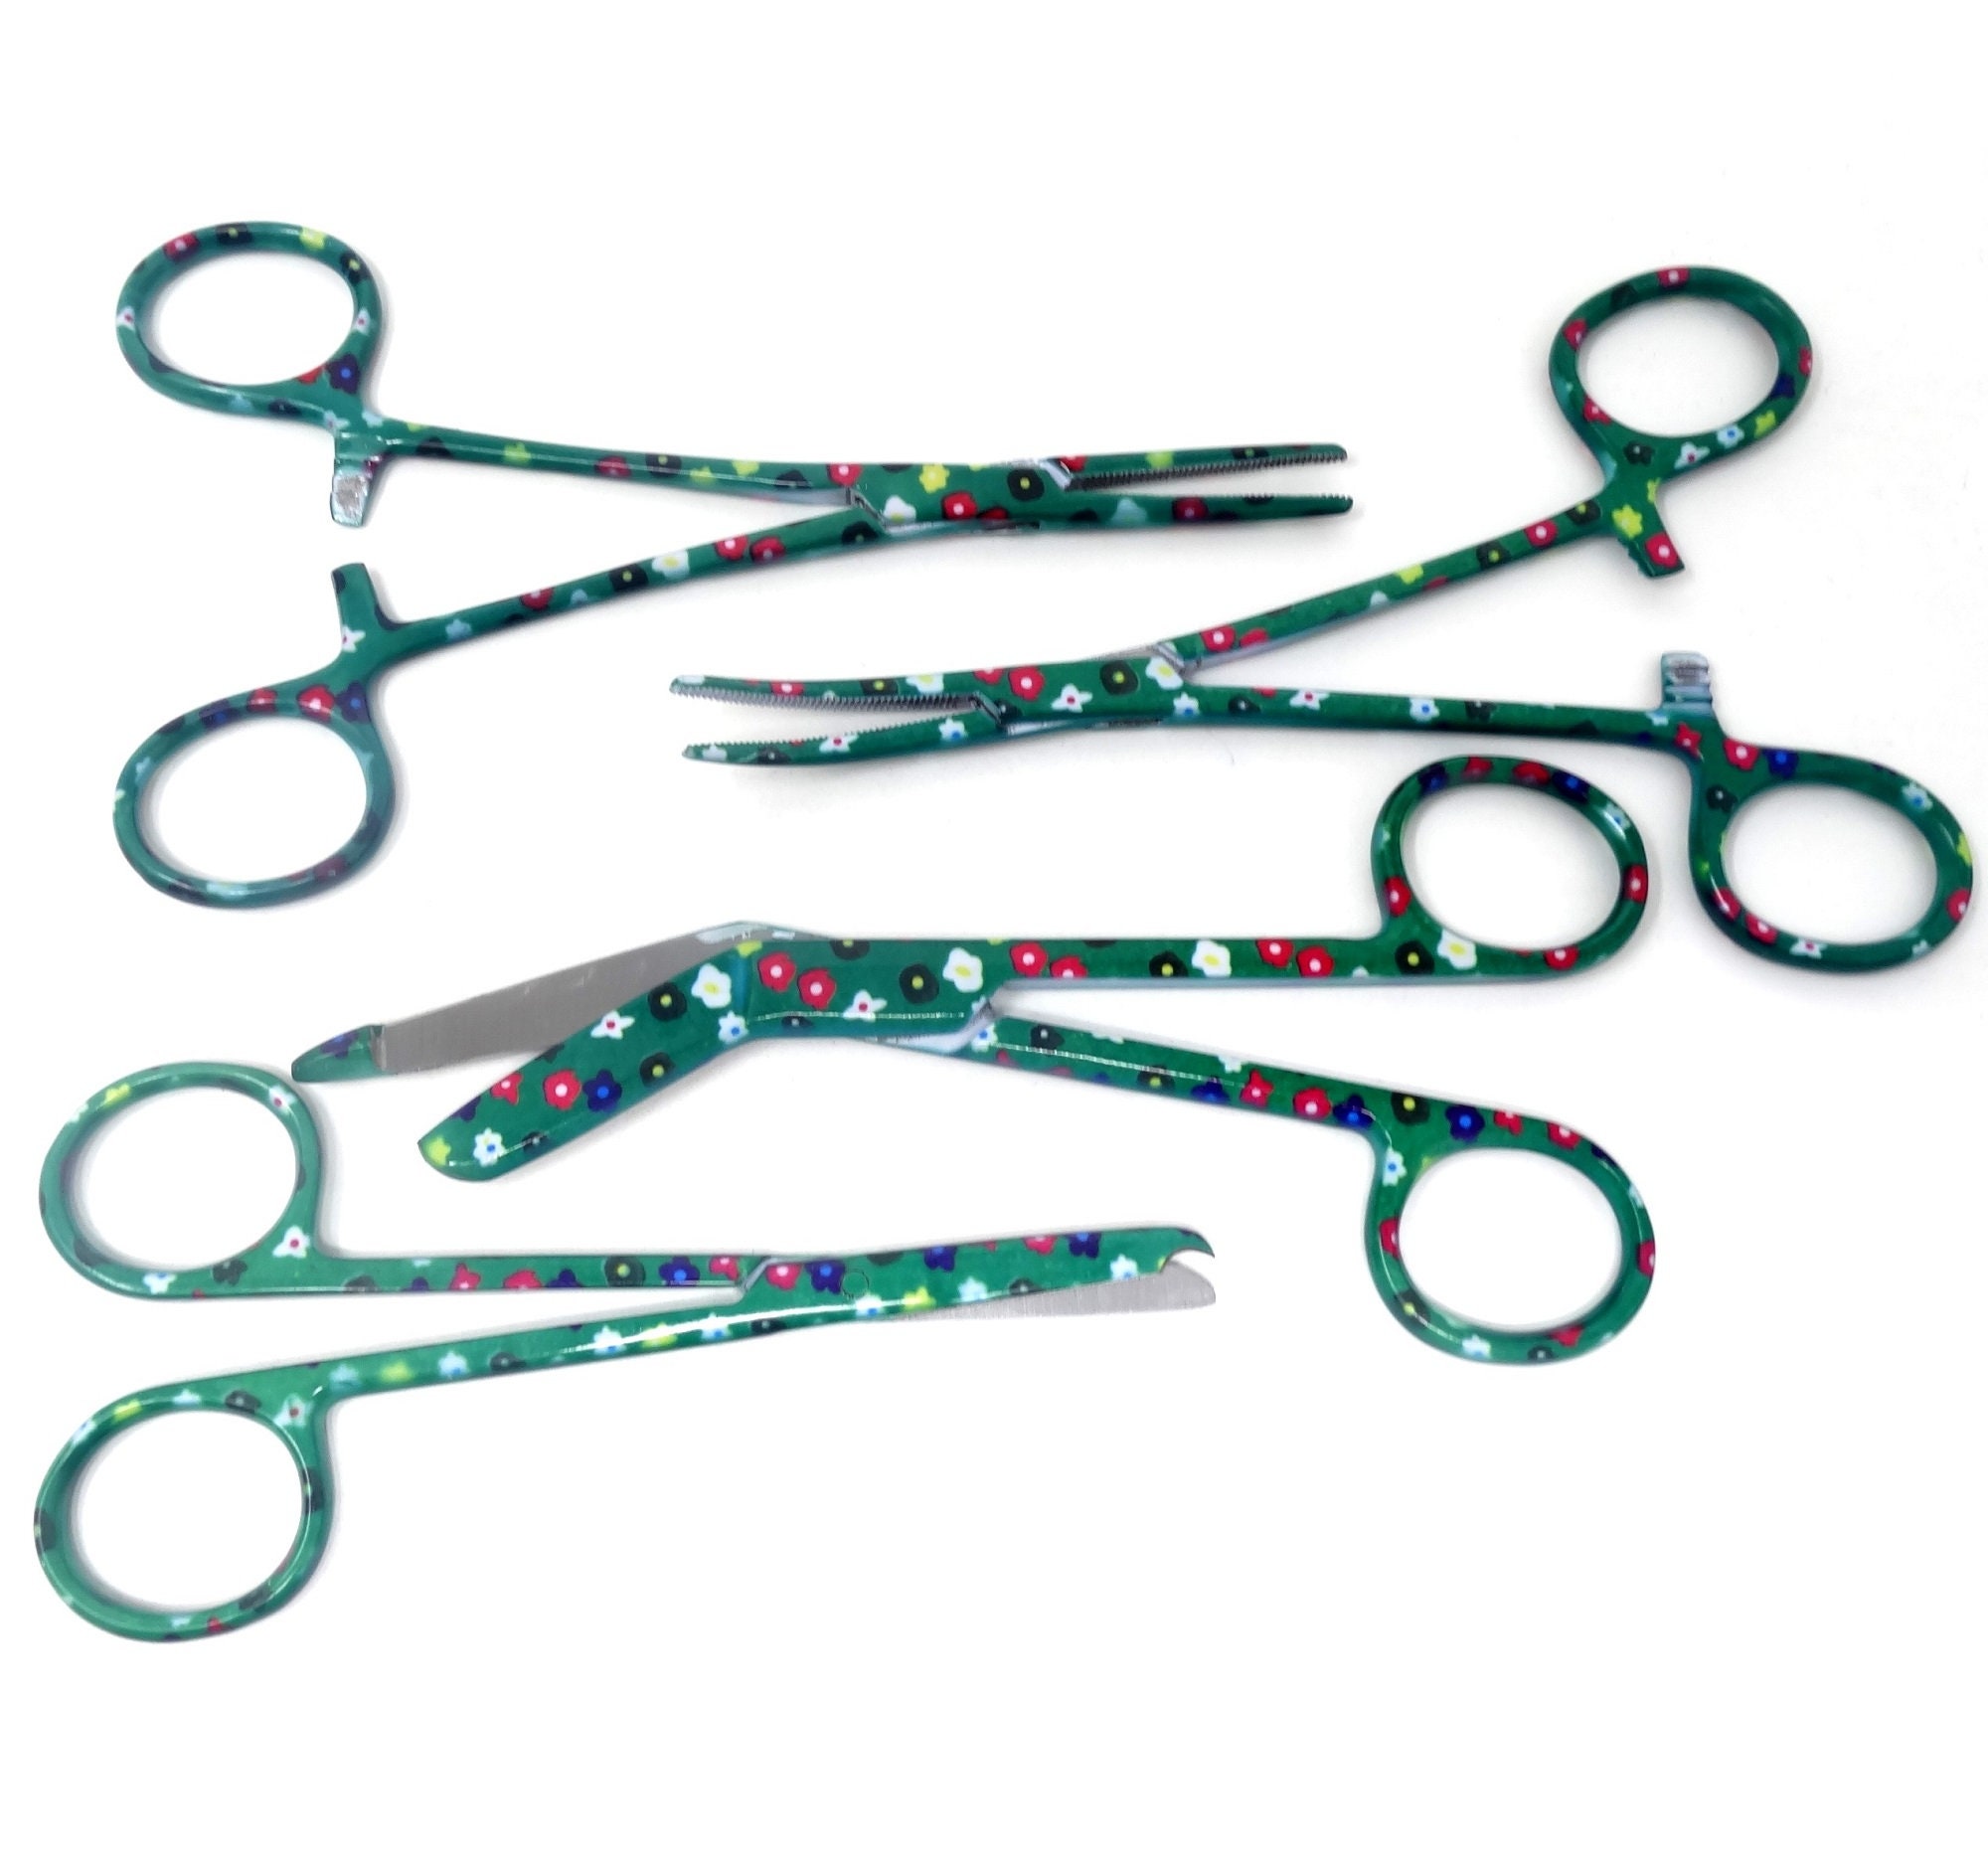 Personalizable Glitter 5in Kid Safe Blunt Tip Scissors, Kid School  Scissors, Kid Safe School Scissors 